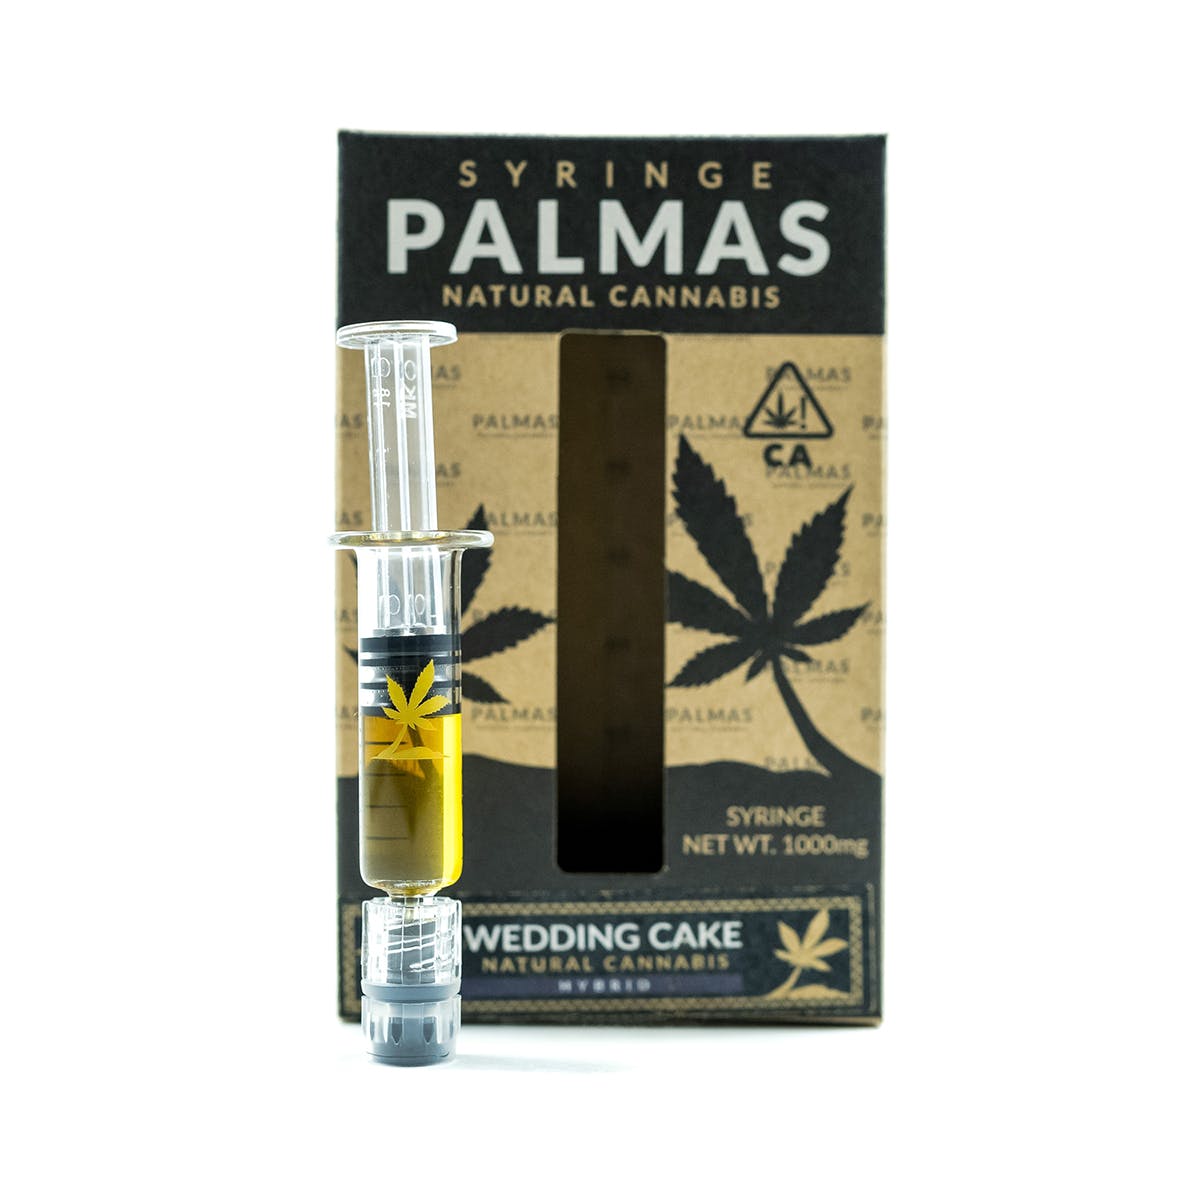 marijuana-dispensaries-the-plug-20-cap-collective-in-los-angeles-palmas-syringe-wedding-cake-1000mg